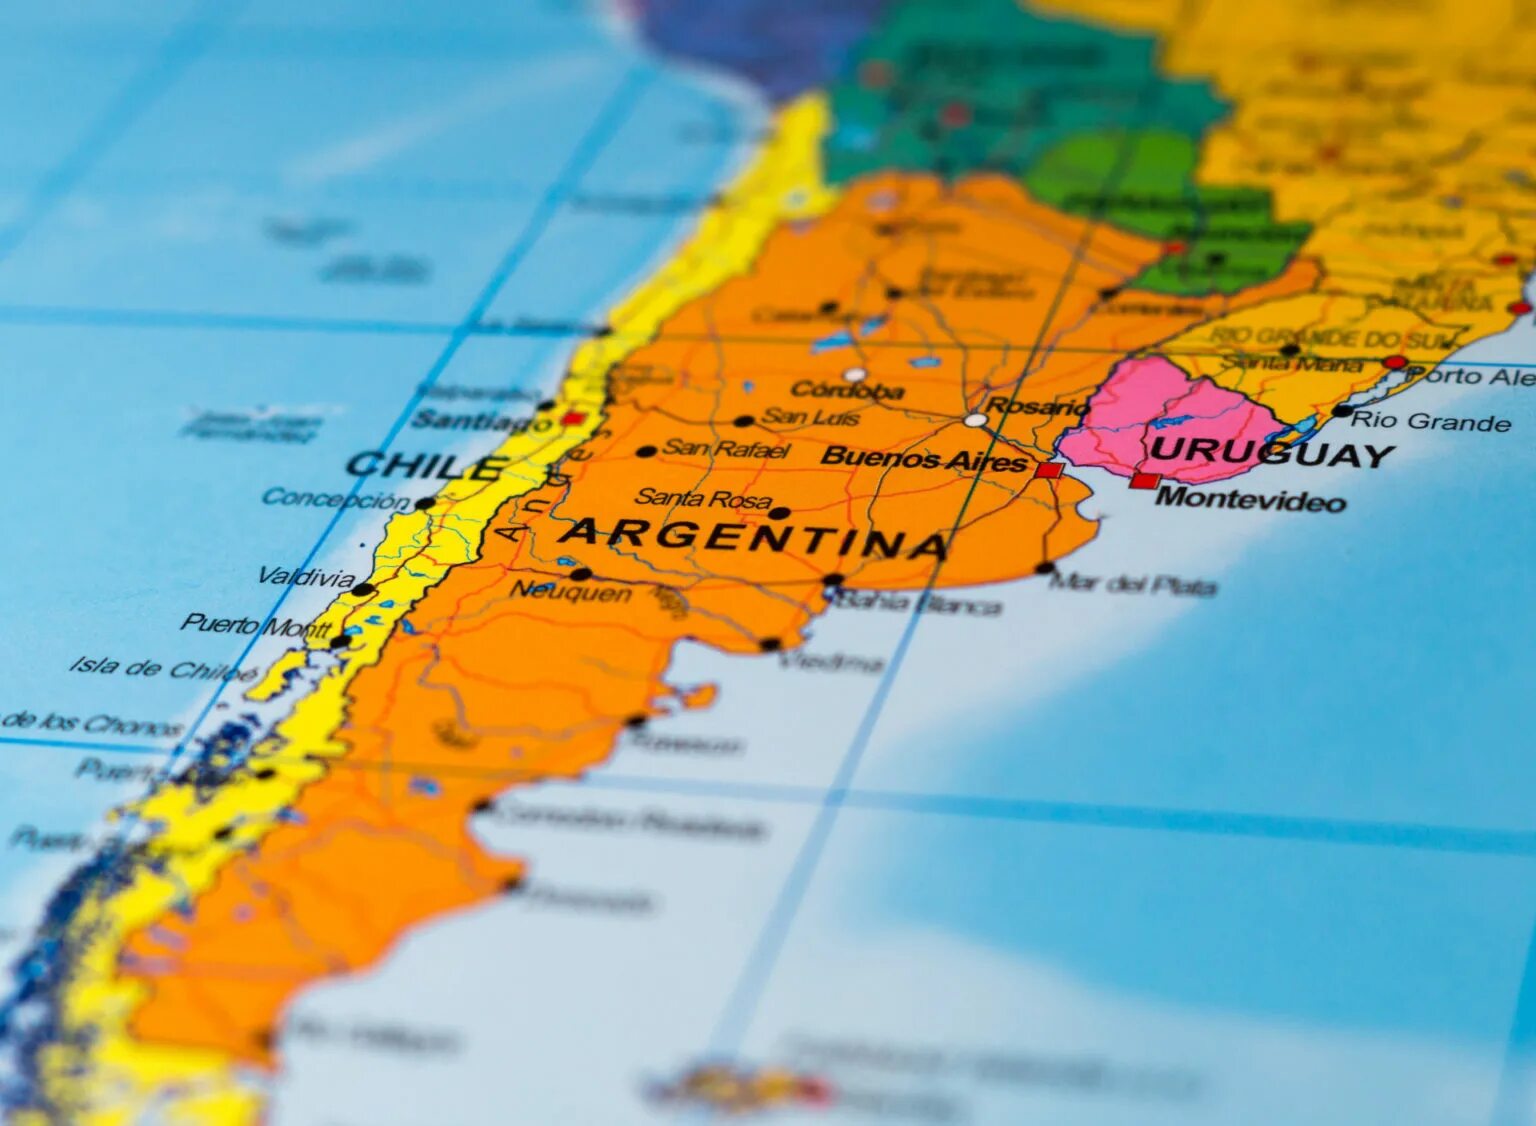 Аргентина географическая карта. Аргентина на карте. Где находится Страна Аргентина на карте Южной Америки.